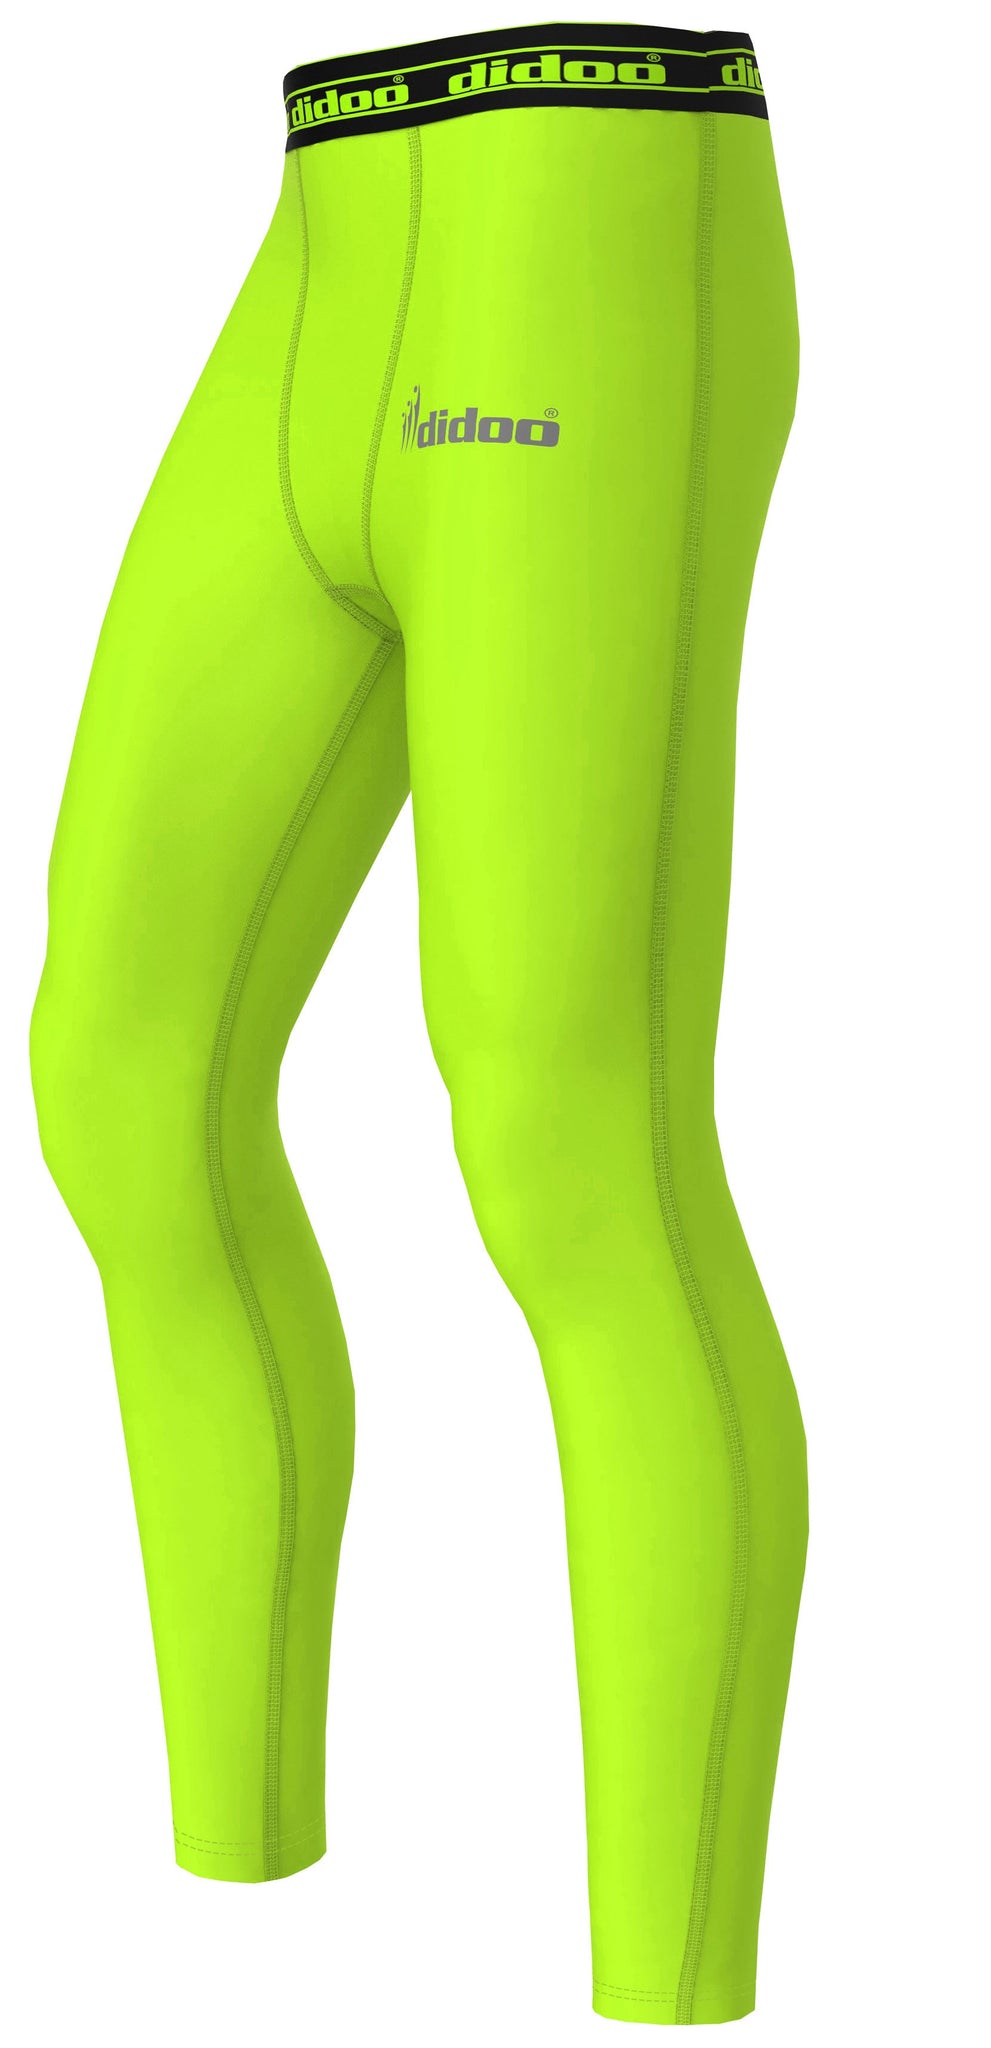 Fluorescent Green Men's Compression Base Layer Leggings